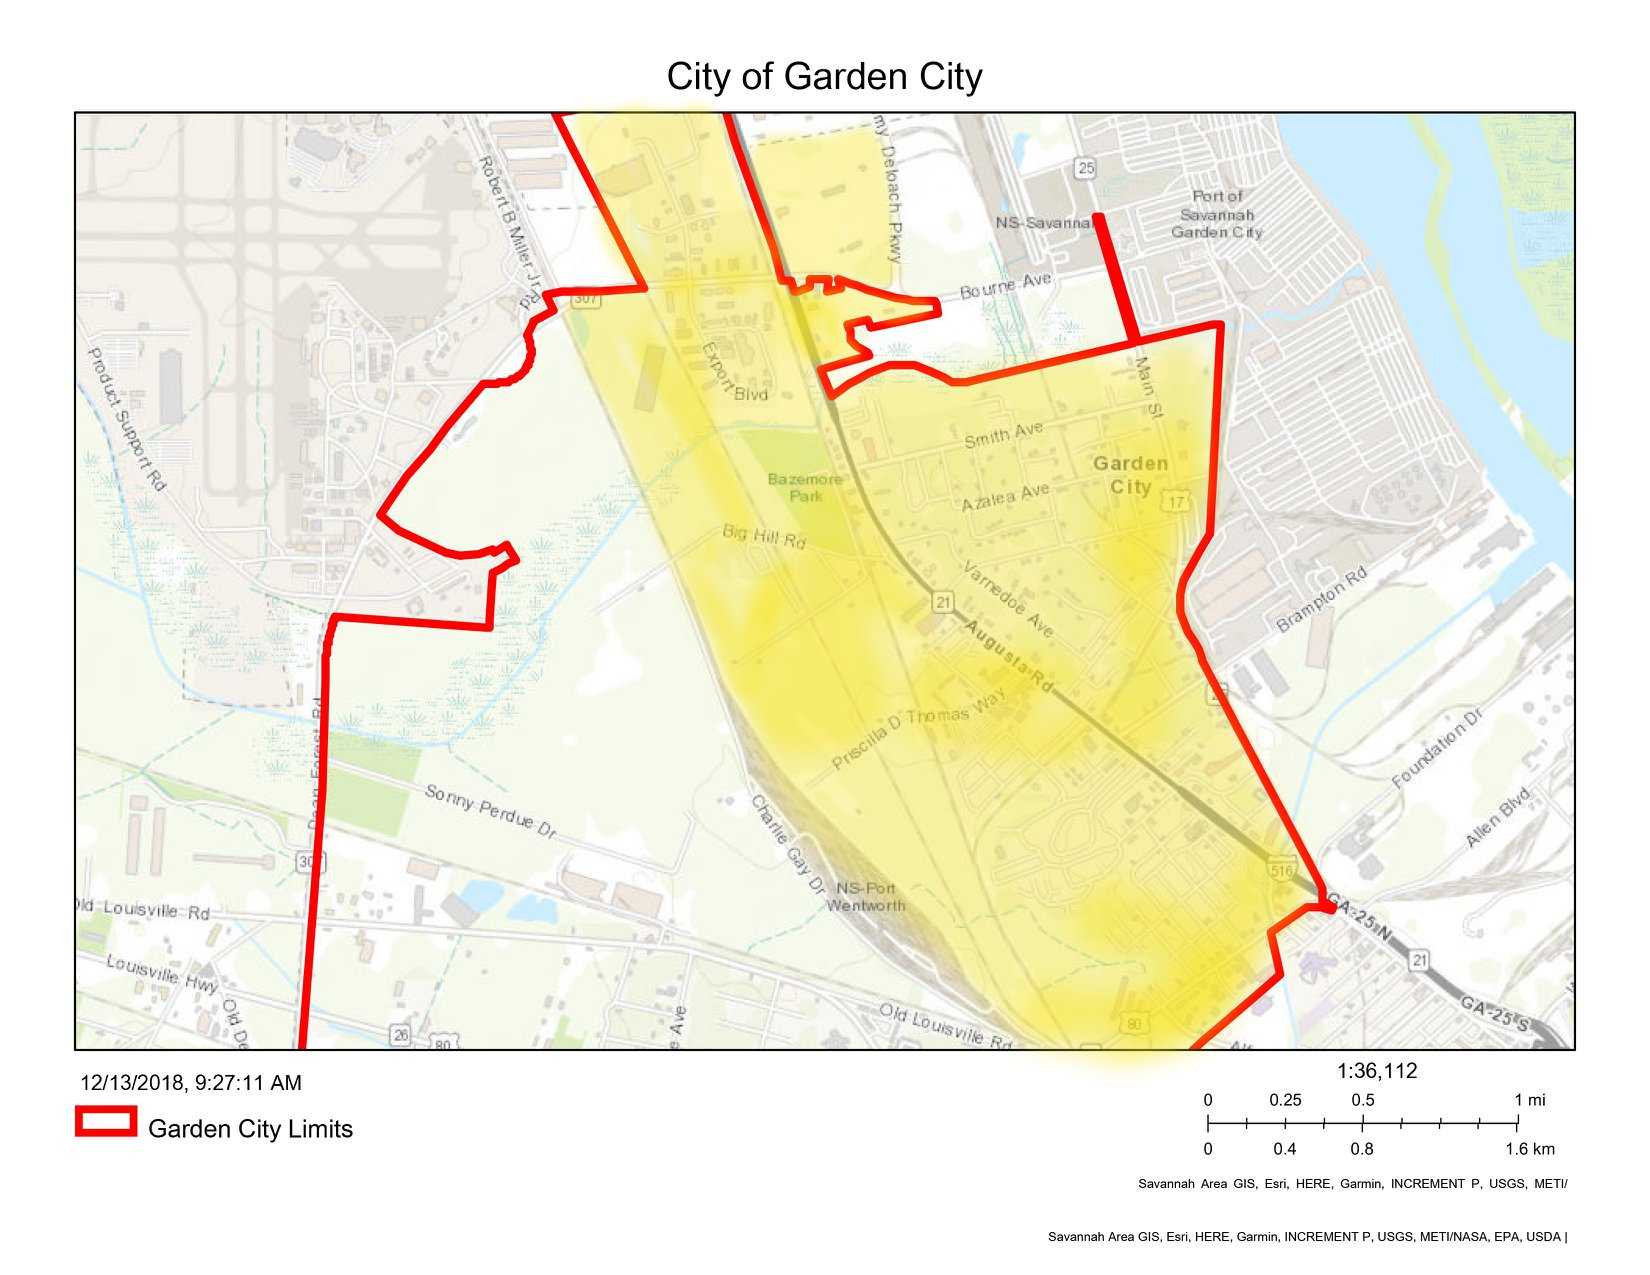 Update Boil Water Advisory Lifted For Garden City